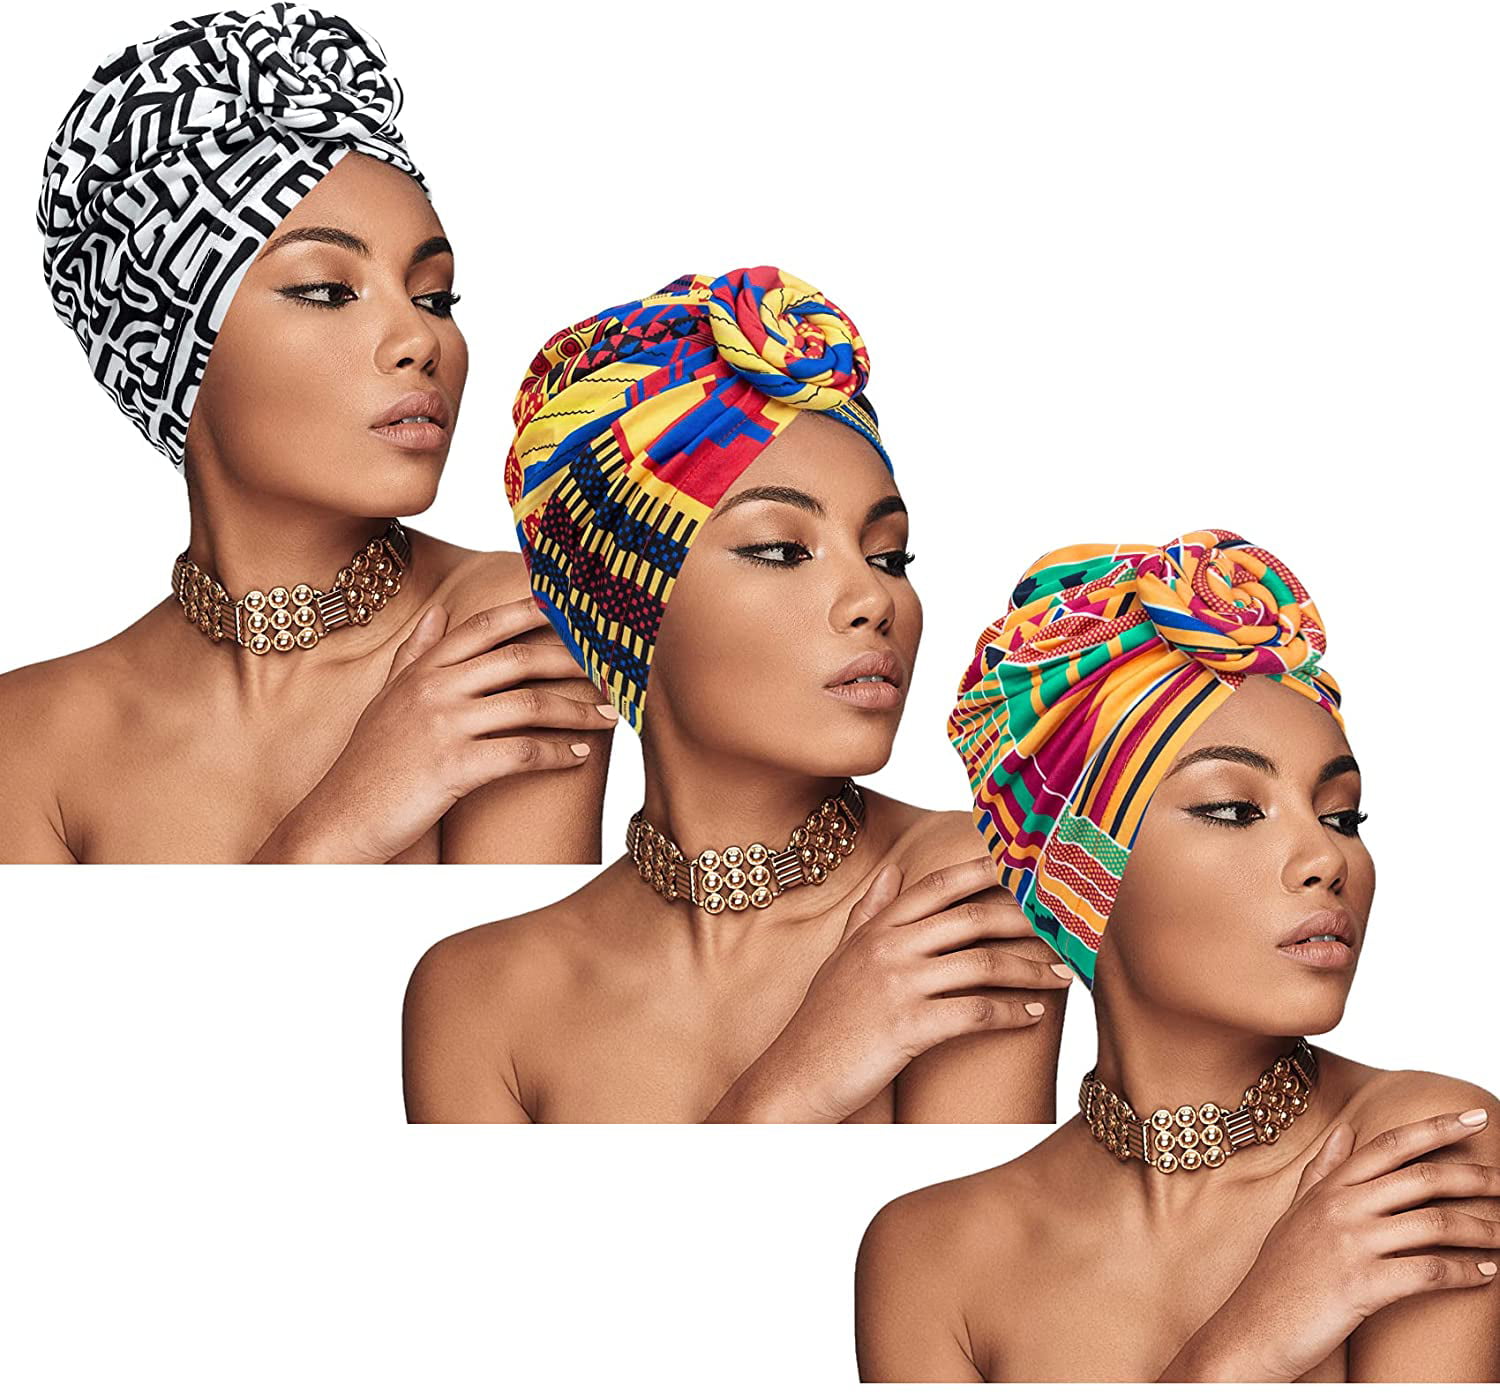 6 Pcs Pre Tied Knot Head Wraps for Women Turban African Headwrap